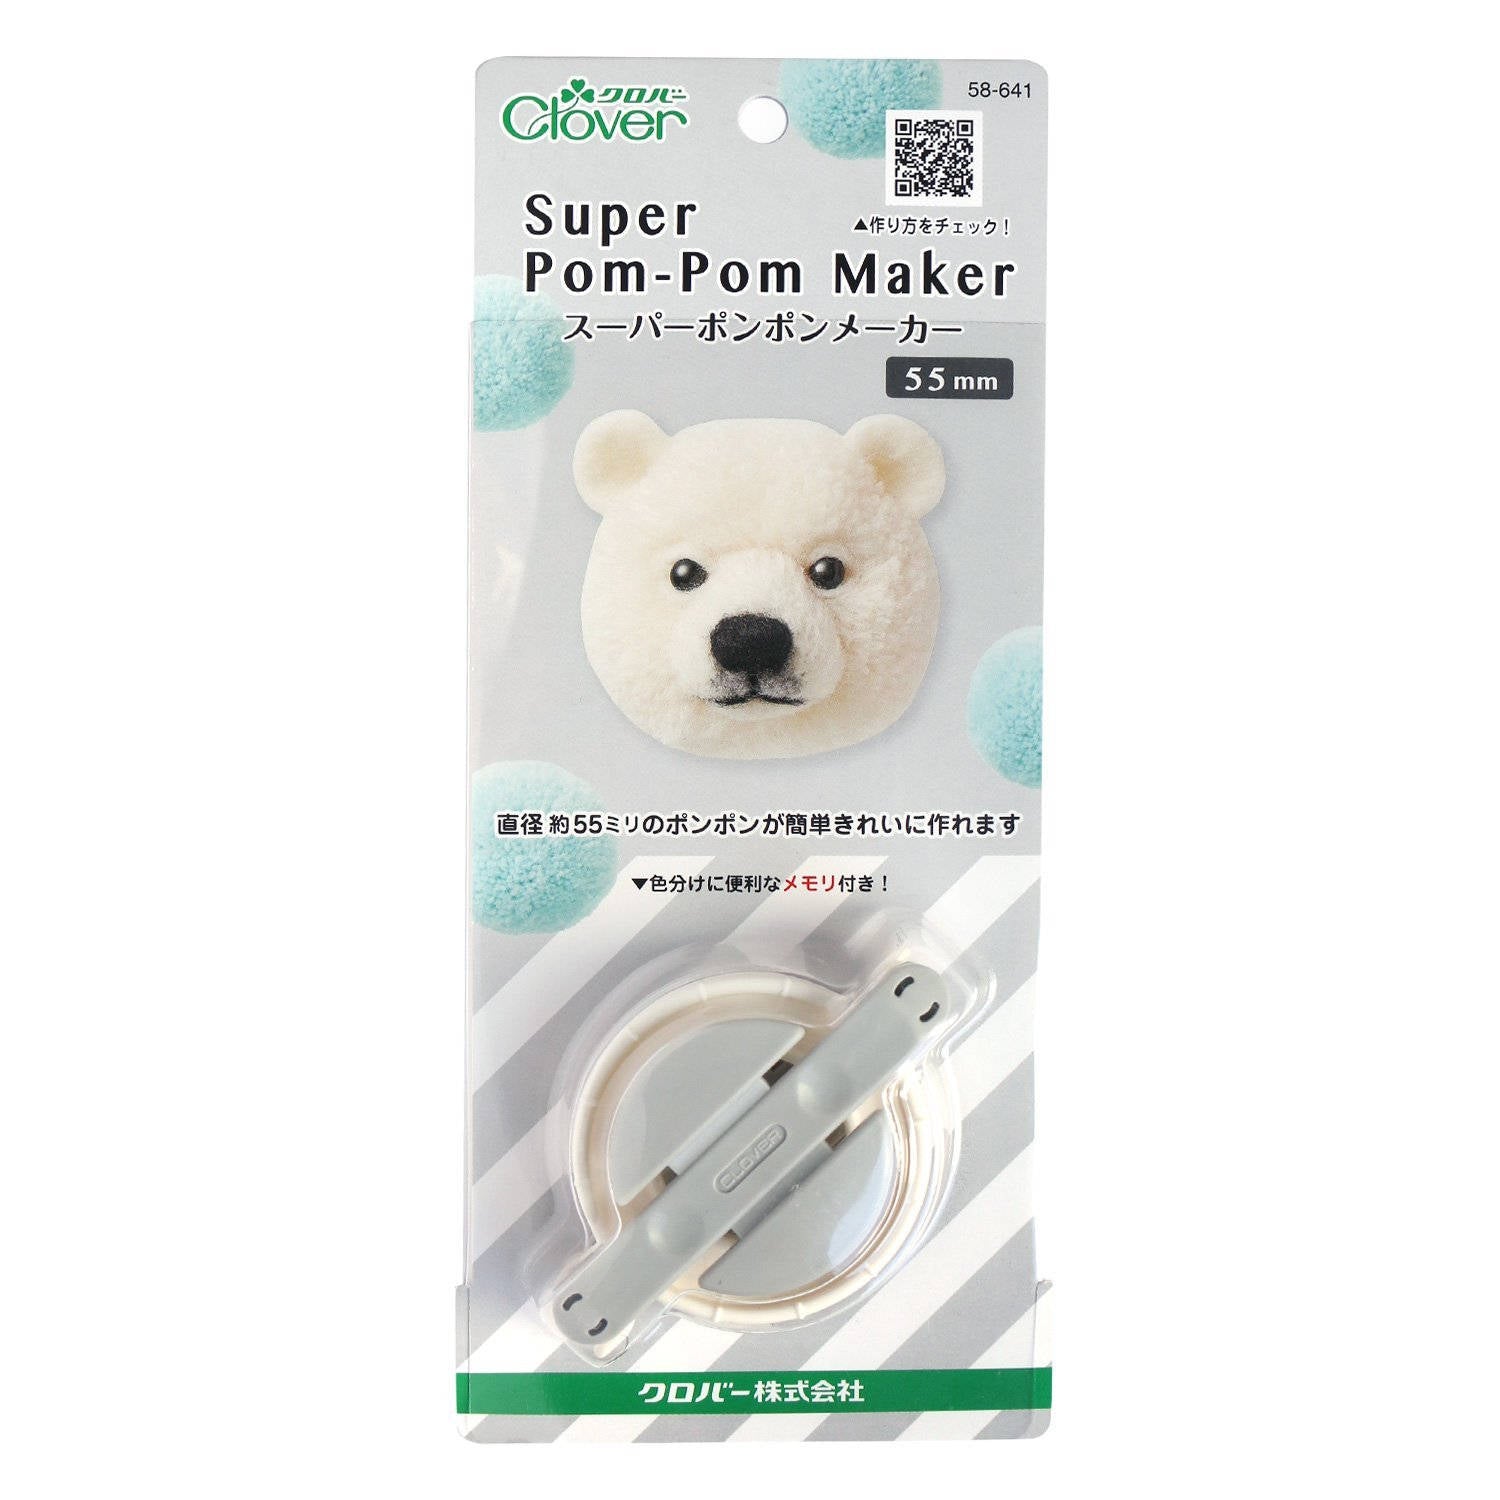 Clover Pom-Pom Maker, S - 2 pack